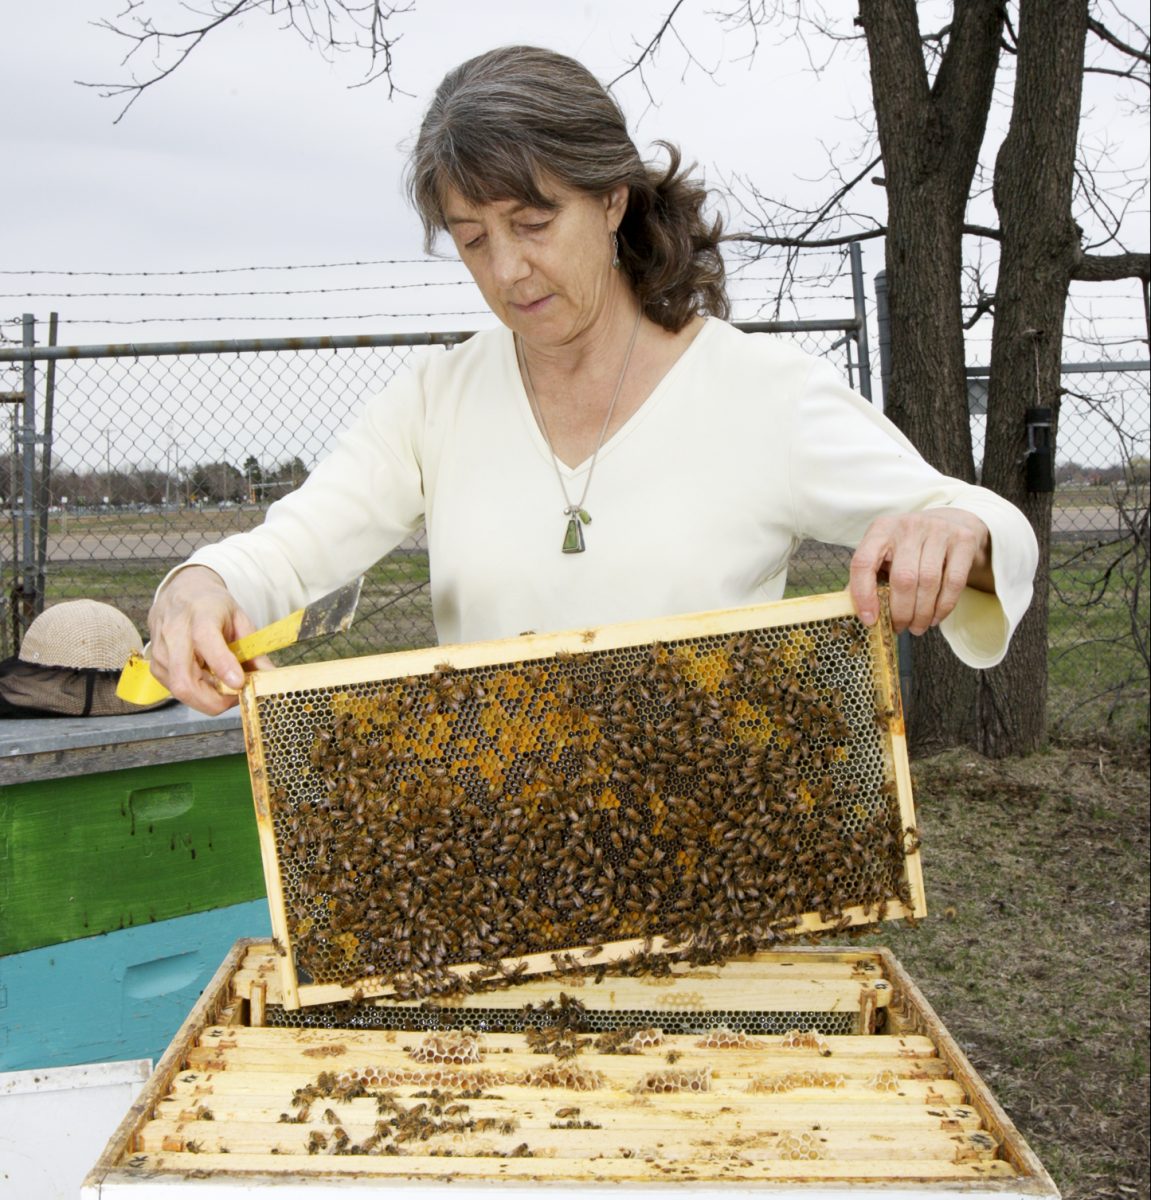 Spivak+working+with+honeybees+in+2015.